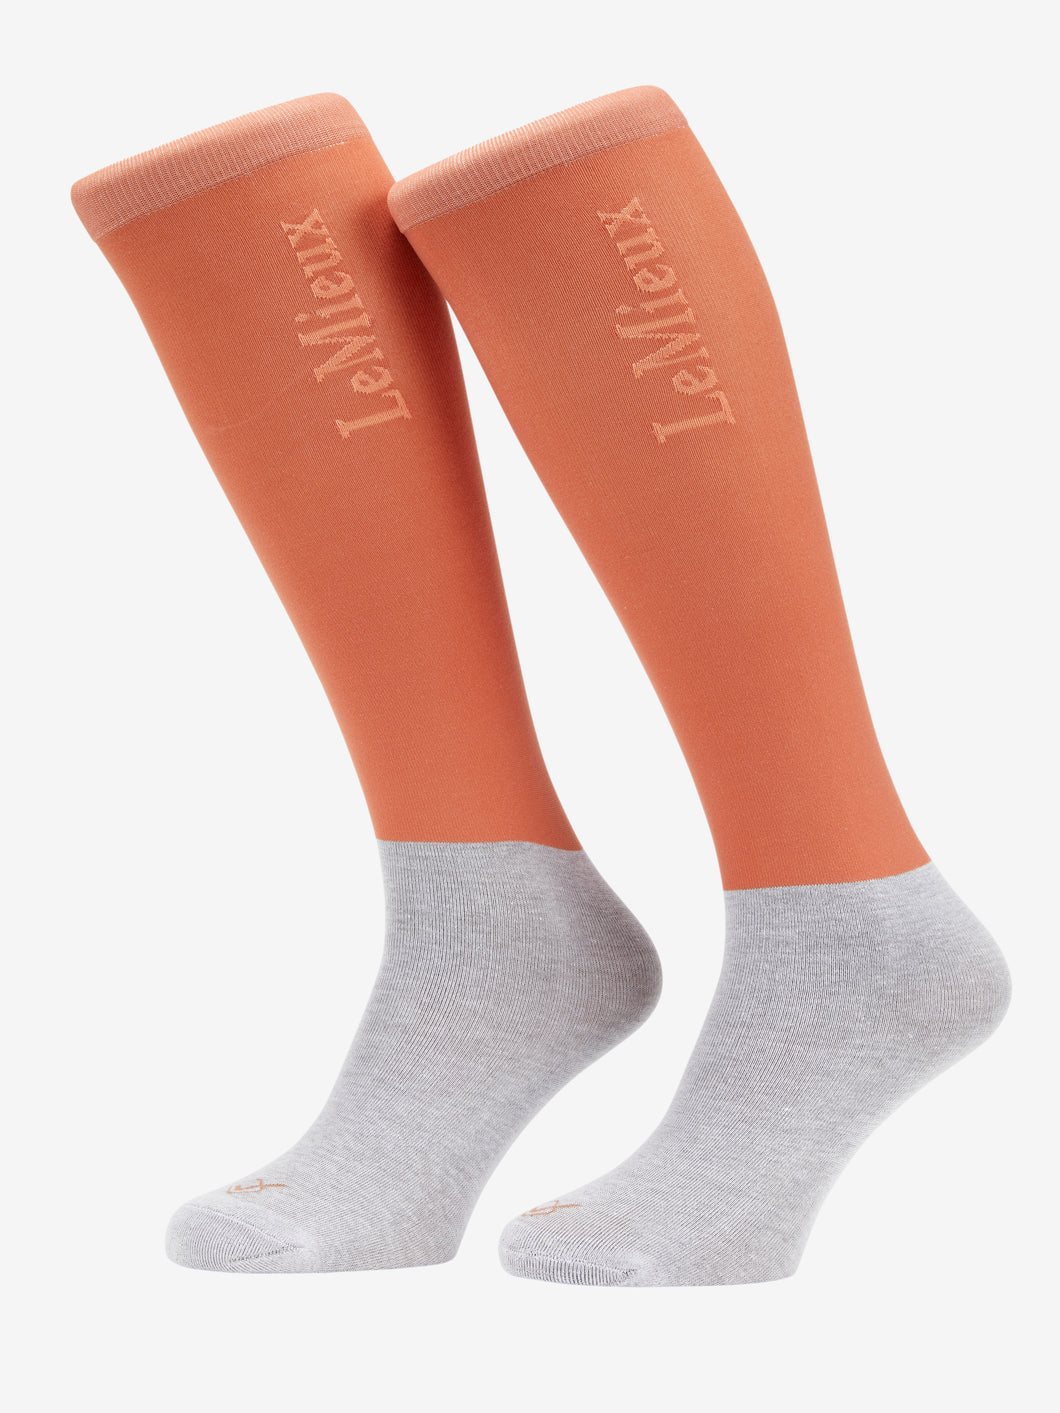 LeMieux Competition Socks Apricot Twin Pack